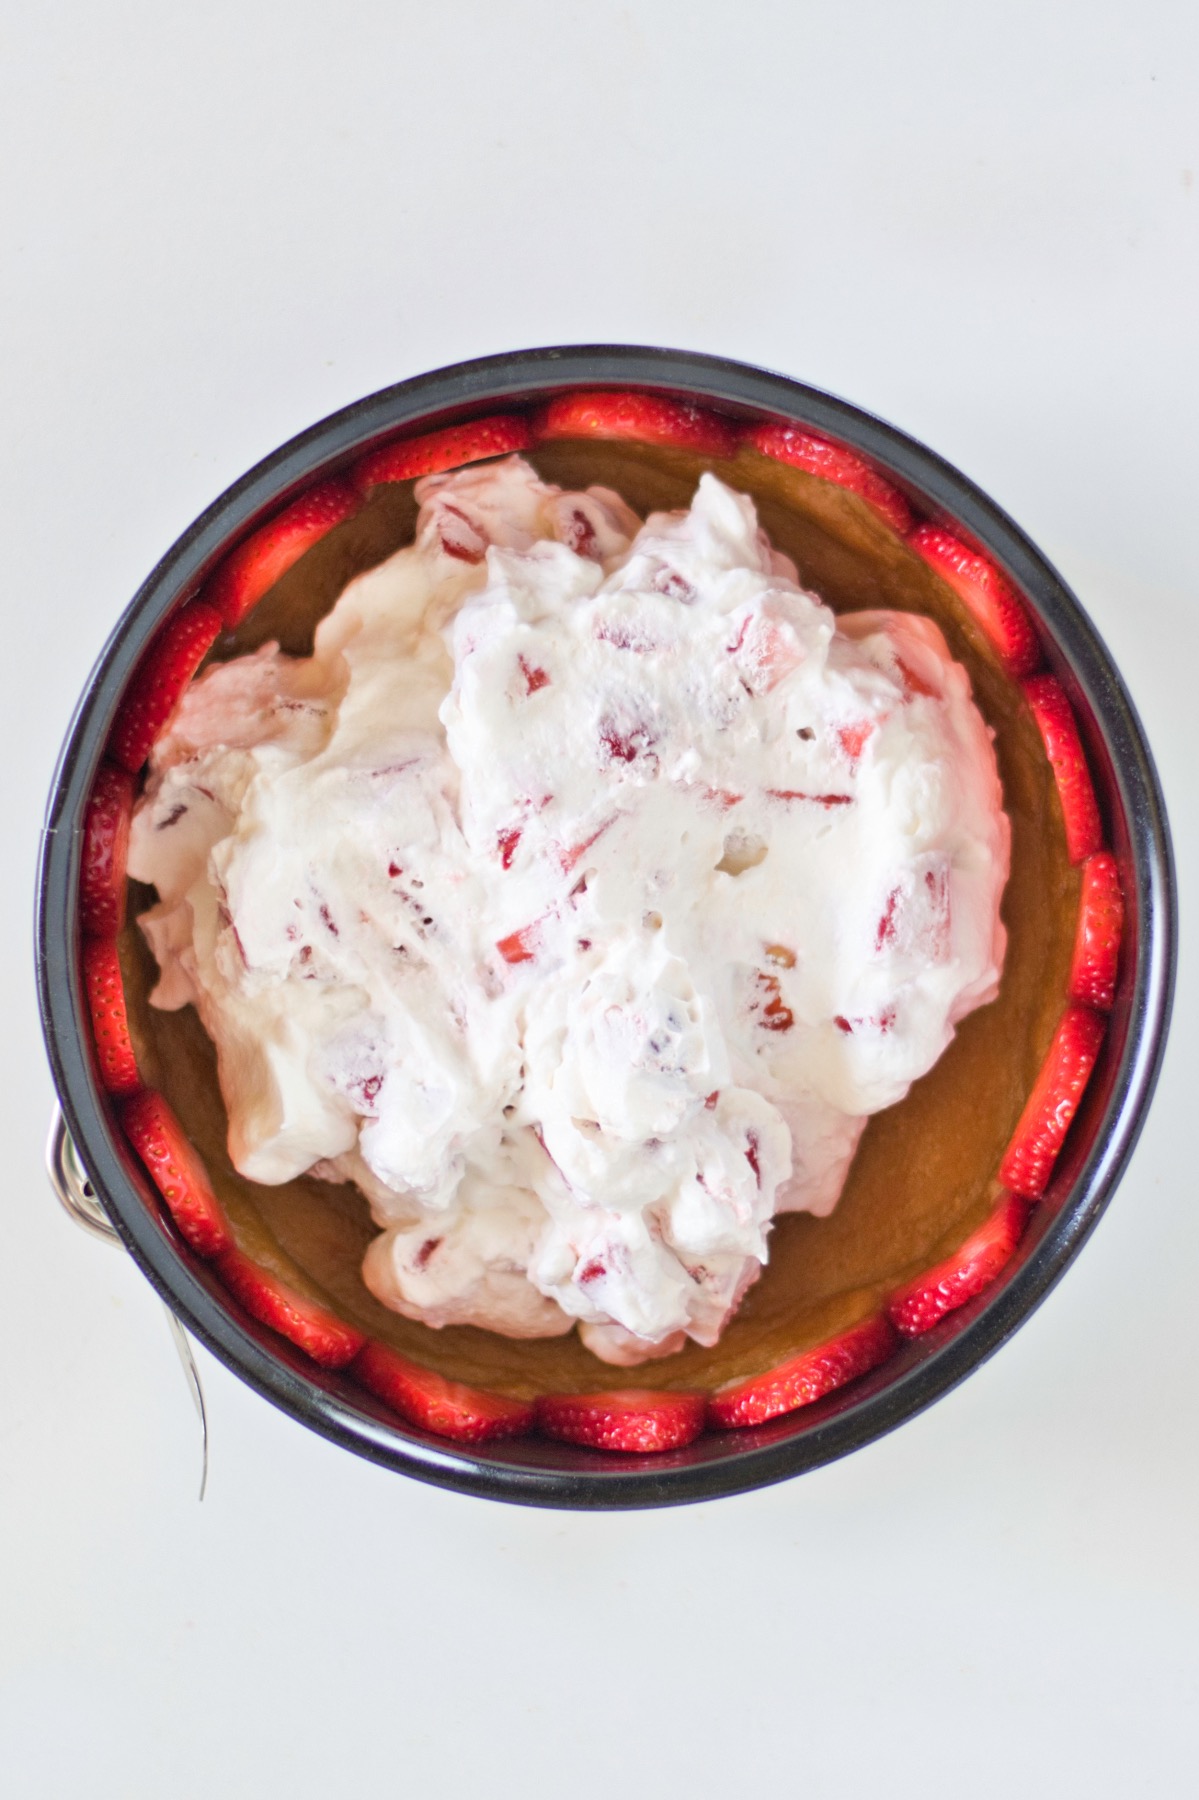 add the whipped cream to the strawberry cream tart